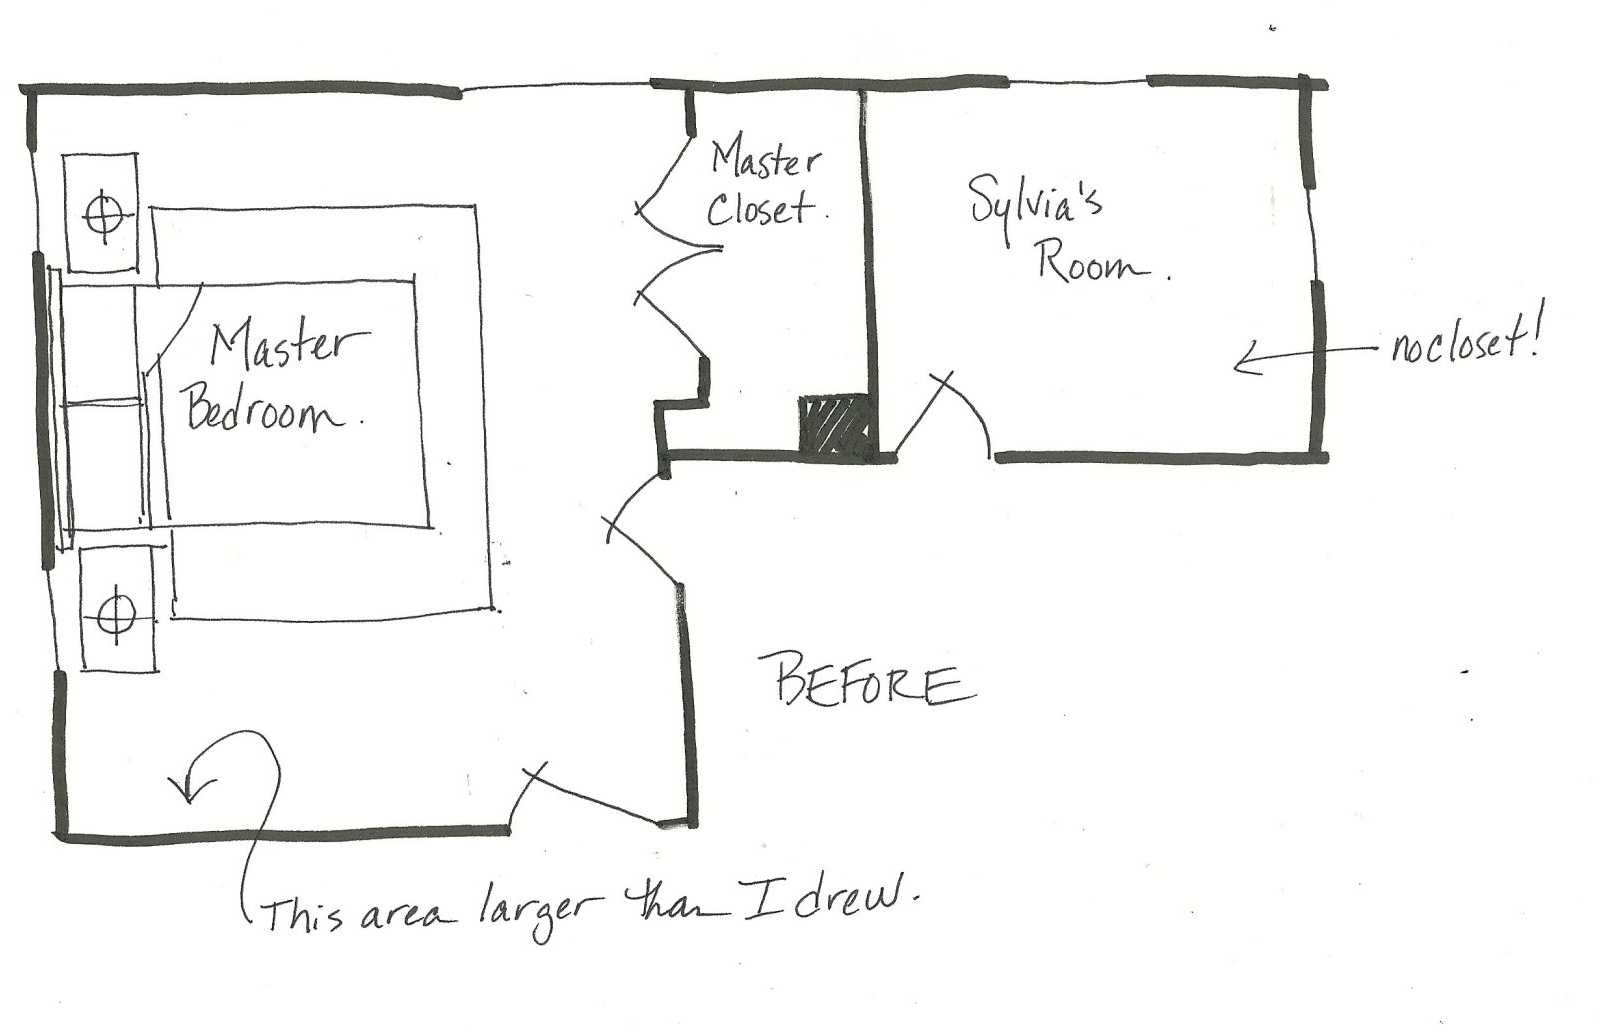 Sketch of what mom envisioned for secret room inside closet